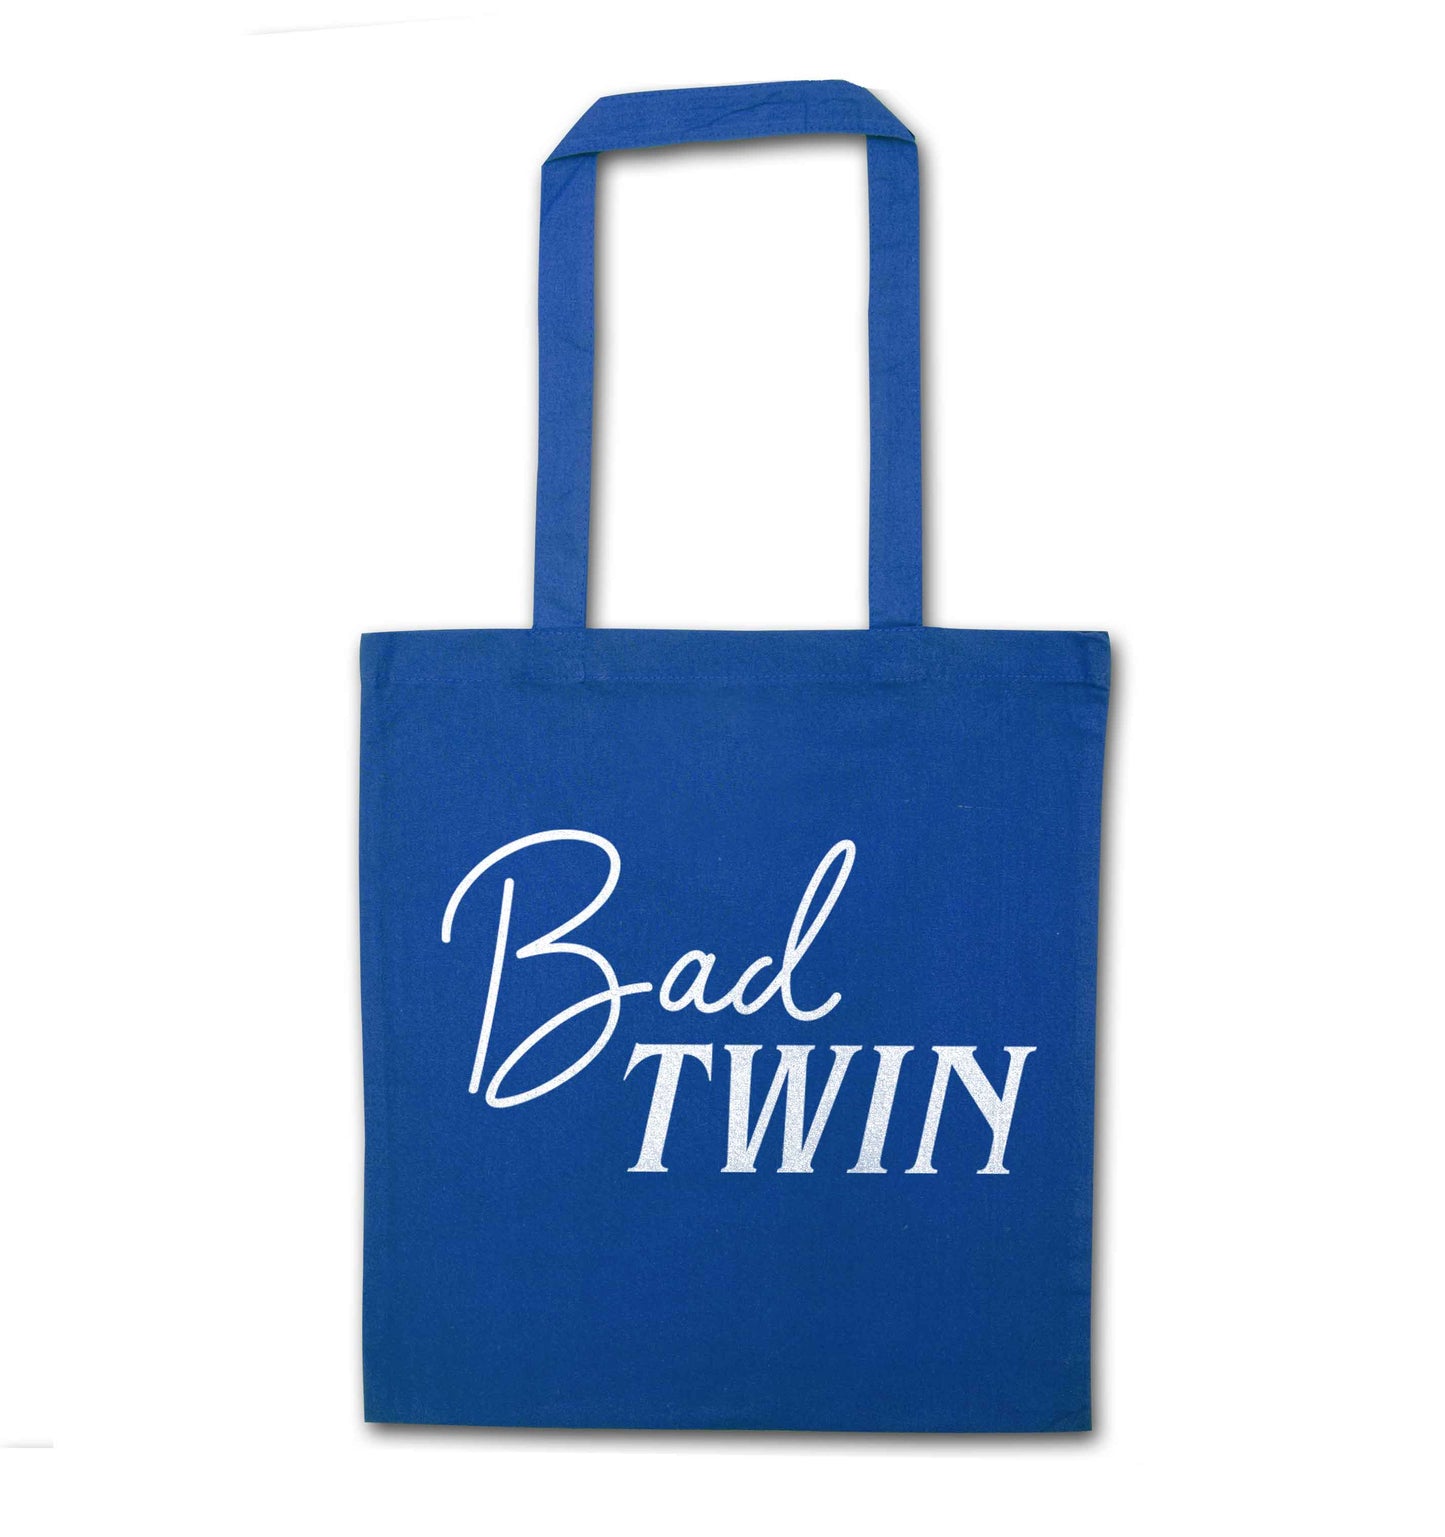 Bad twin blue tote bag